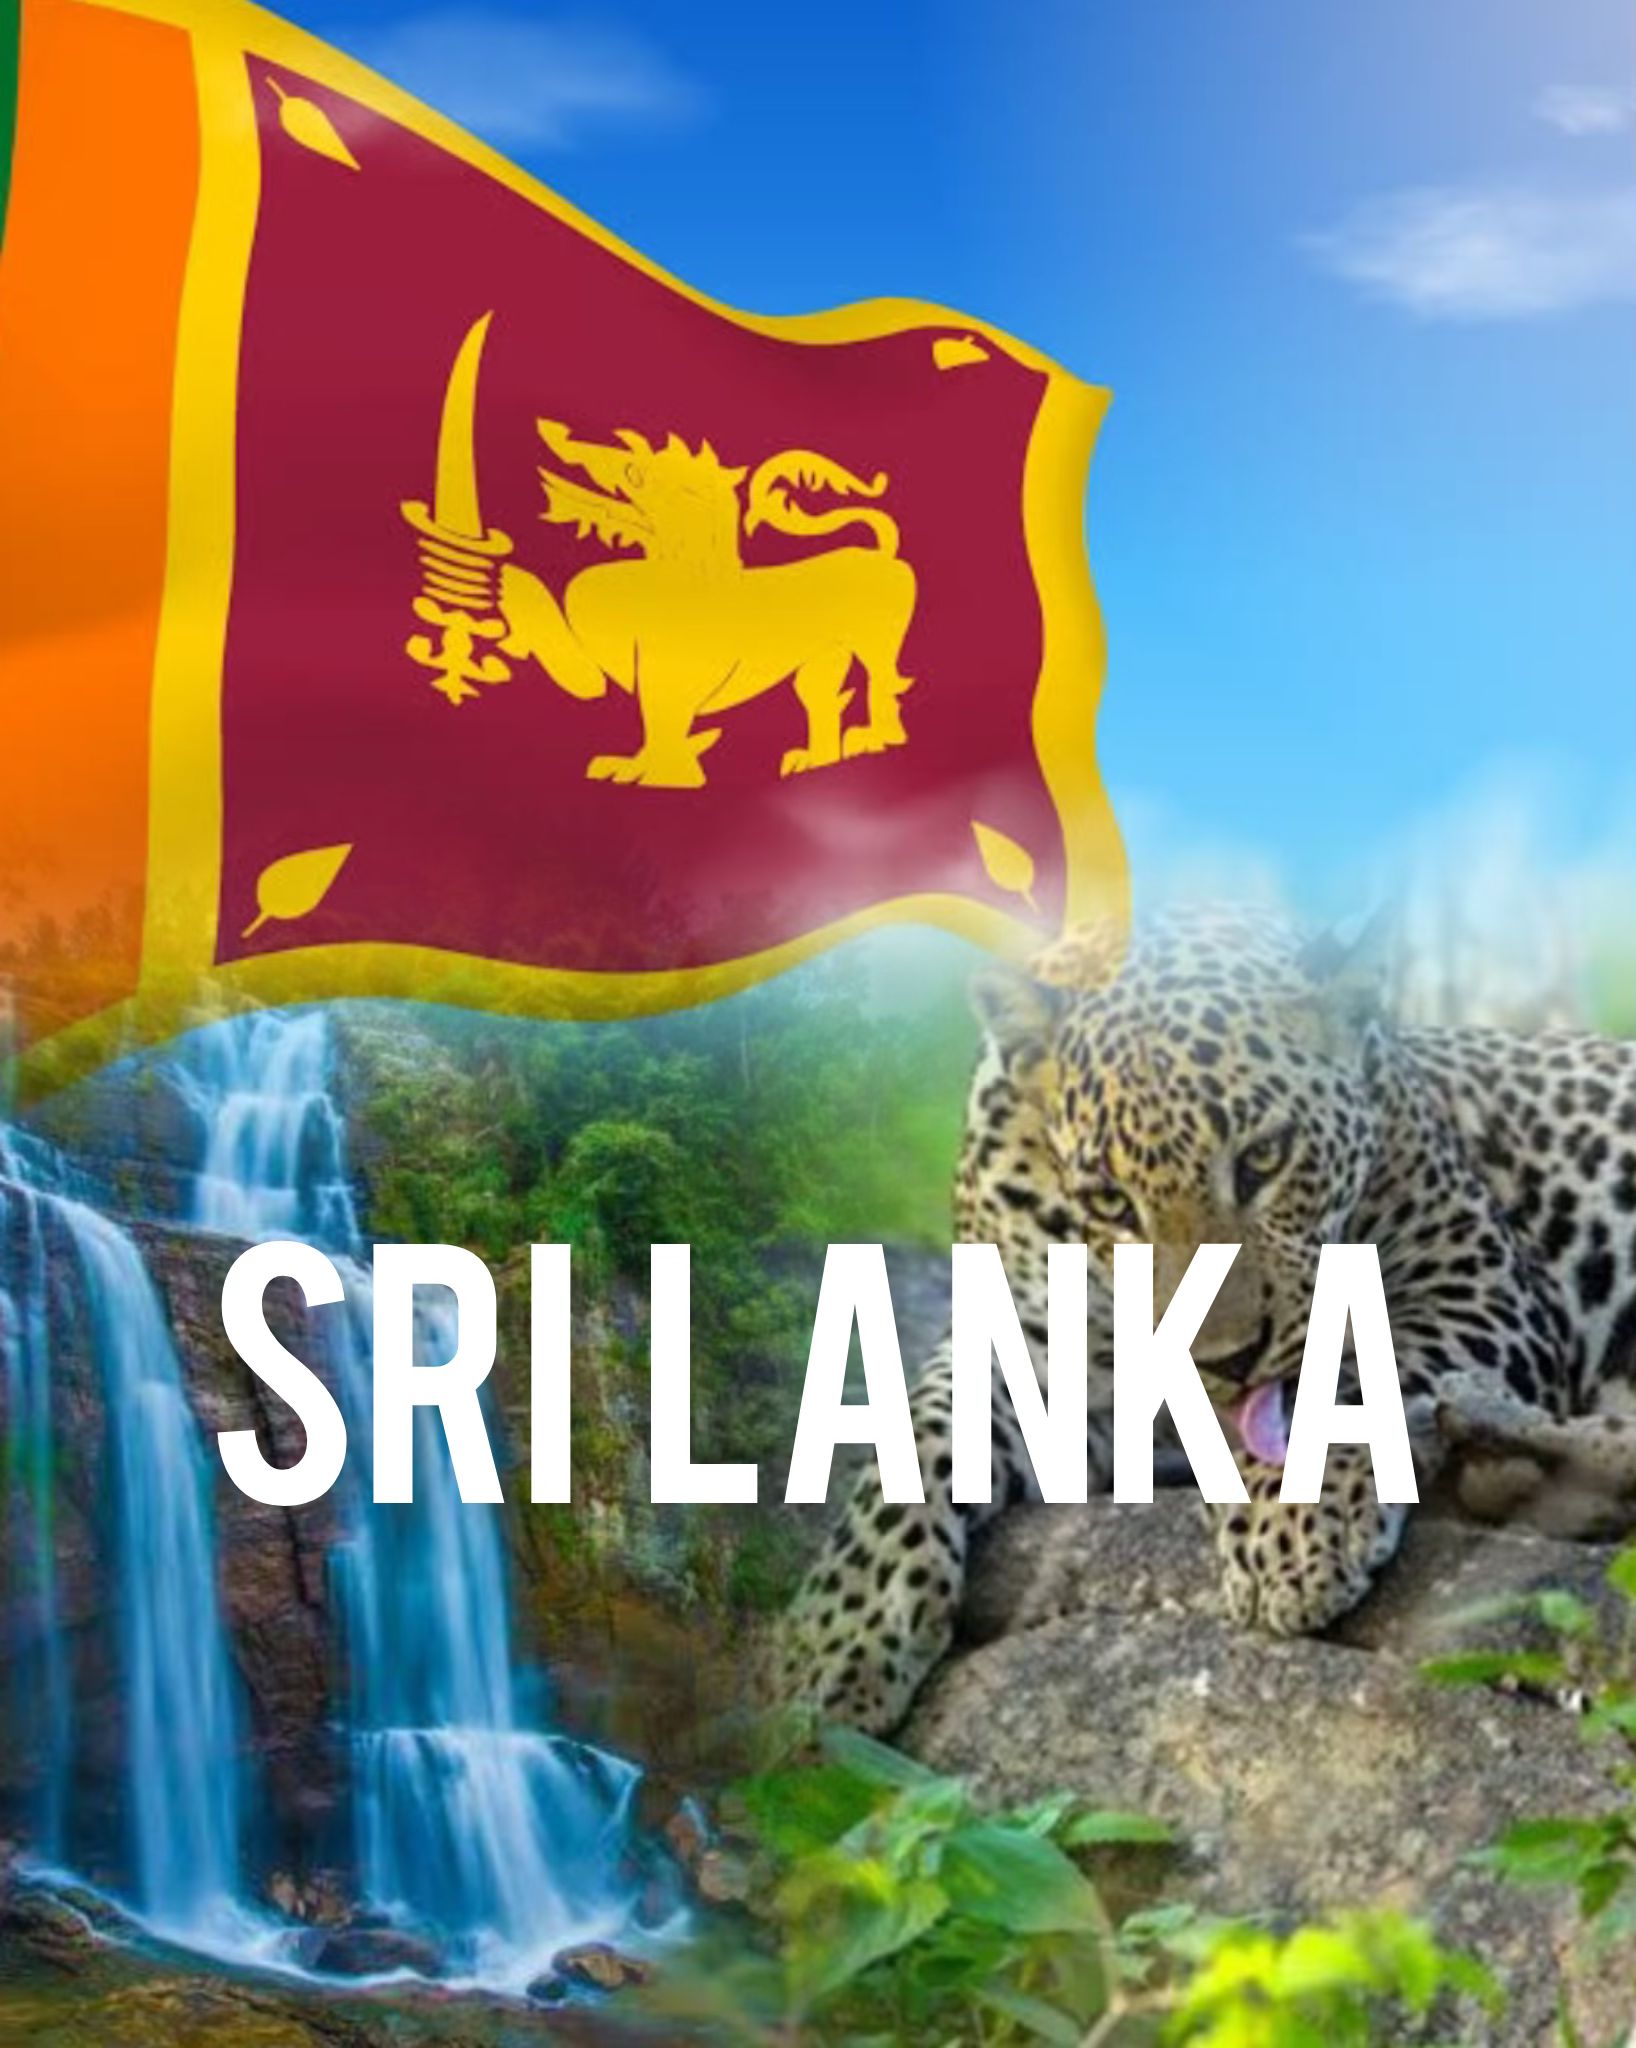 Sri Lanka image 94